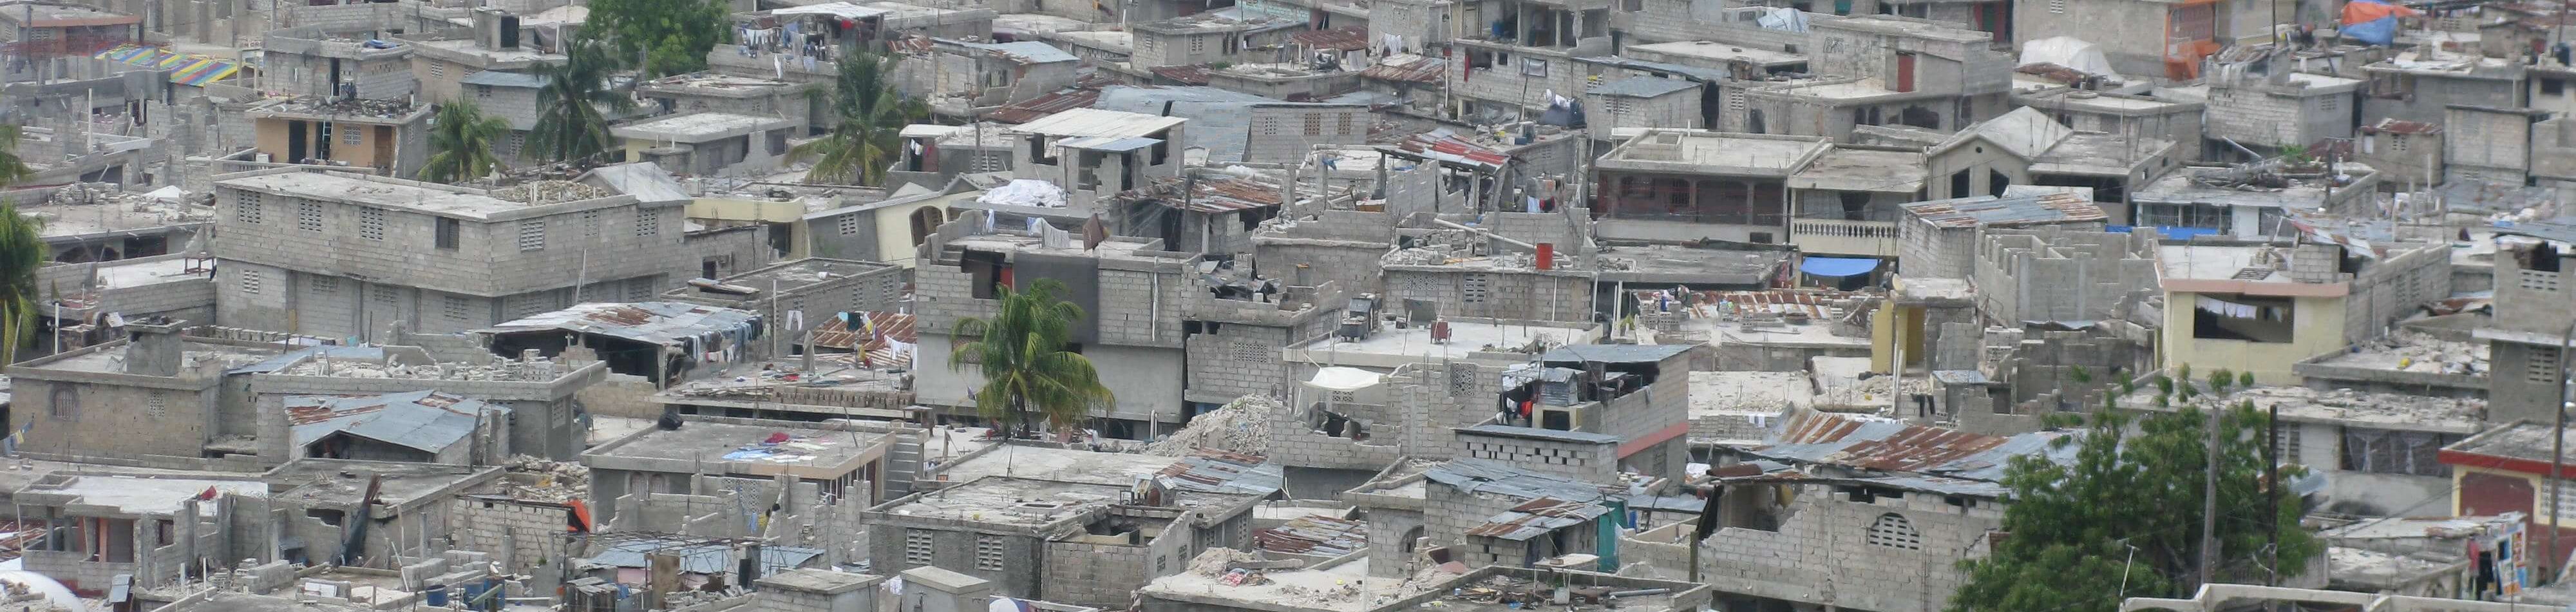 aerial view of dense housing area of Haiti